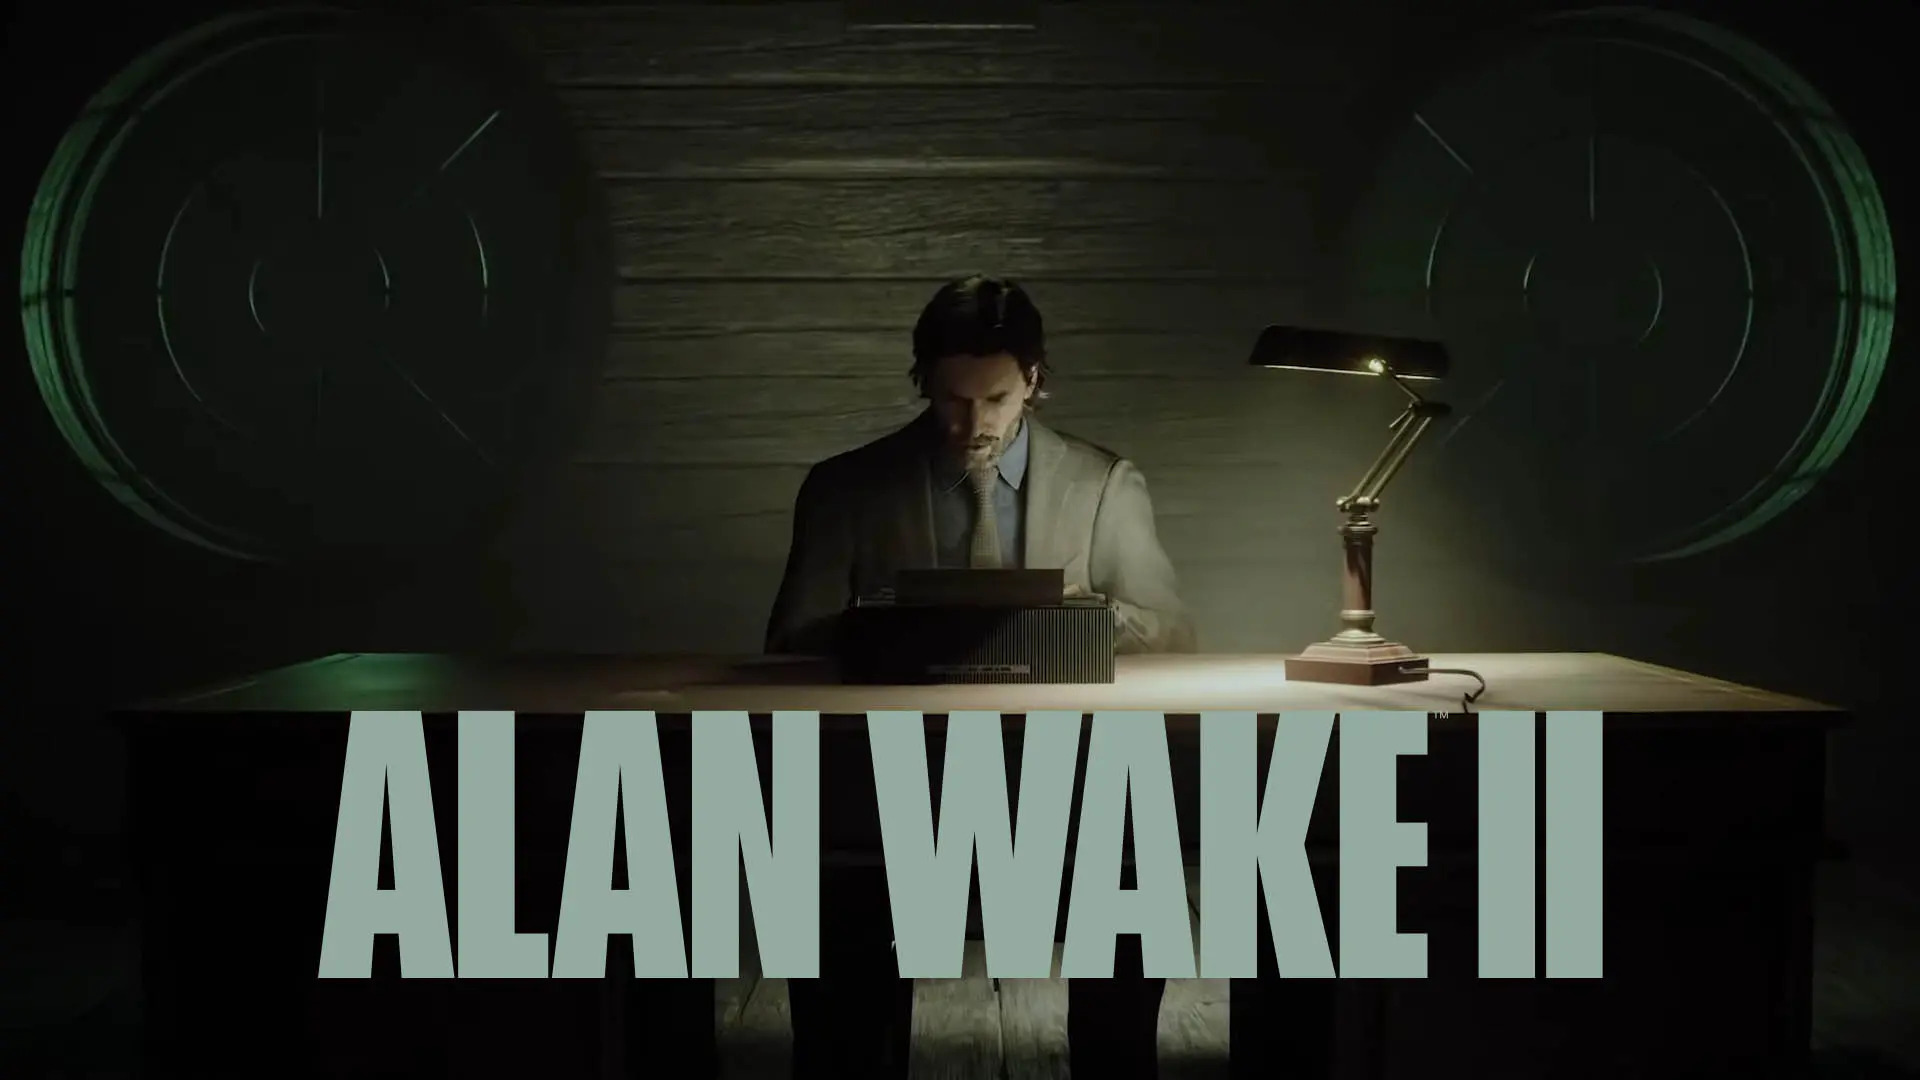 Alan Wake Detonado, PDF, Rifle